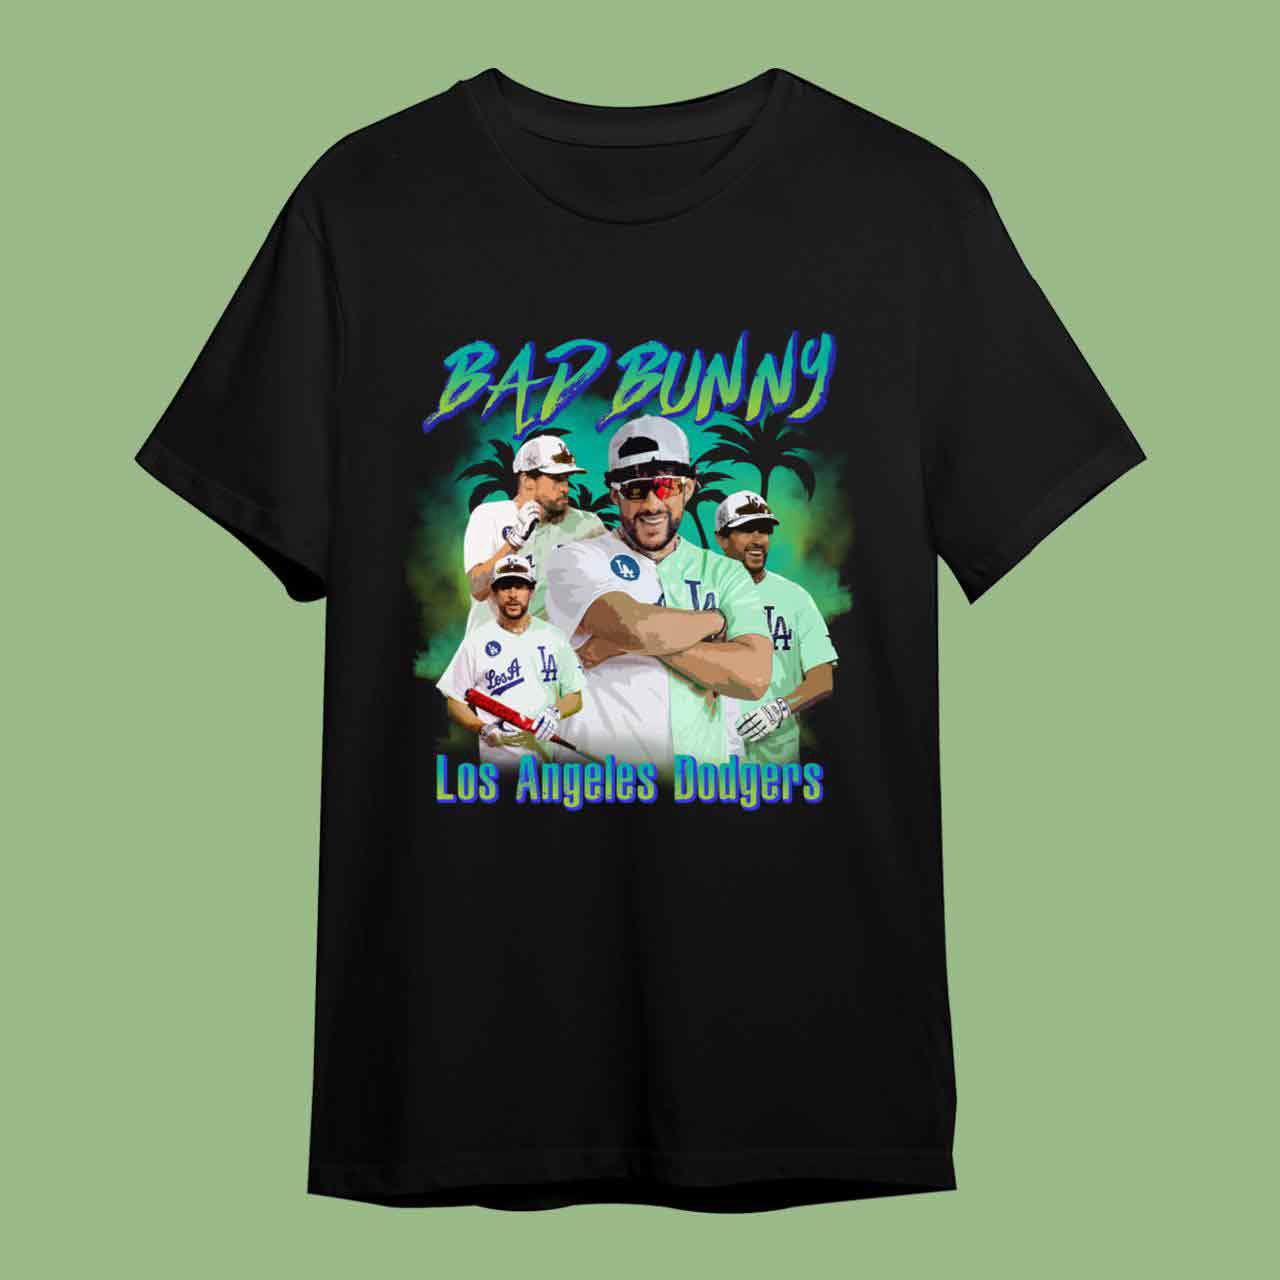 LA Los Angeles Dodgers Bad Bunny Dodgers Shirts - Chow Down Movie